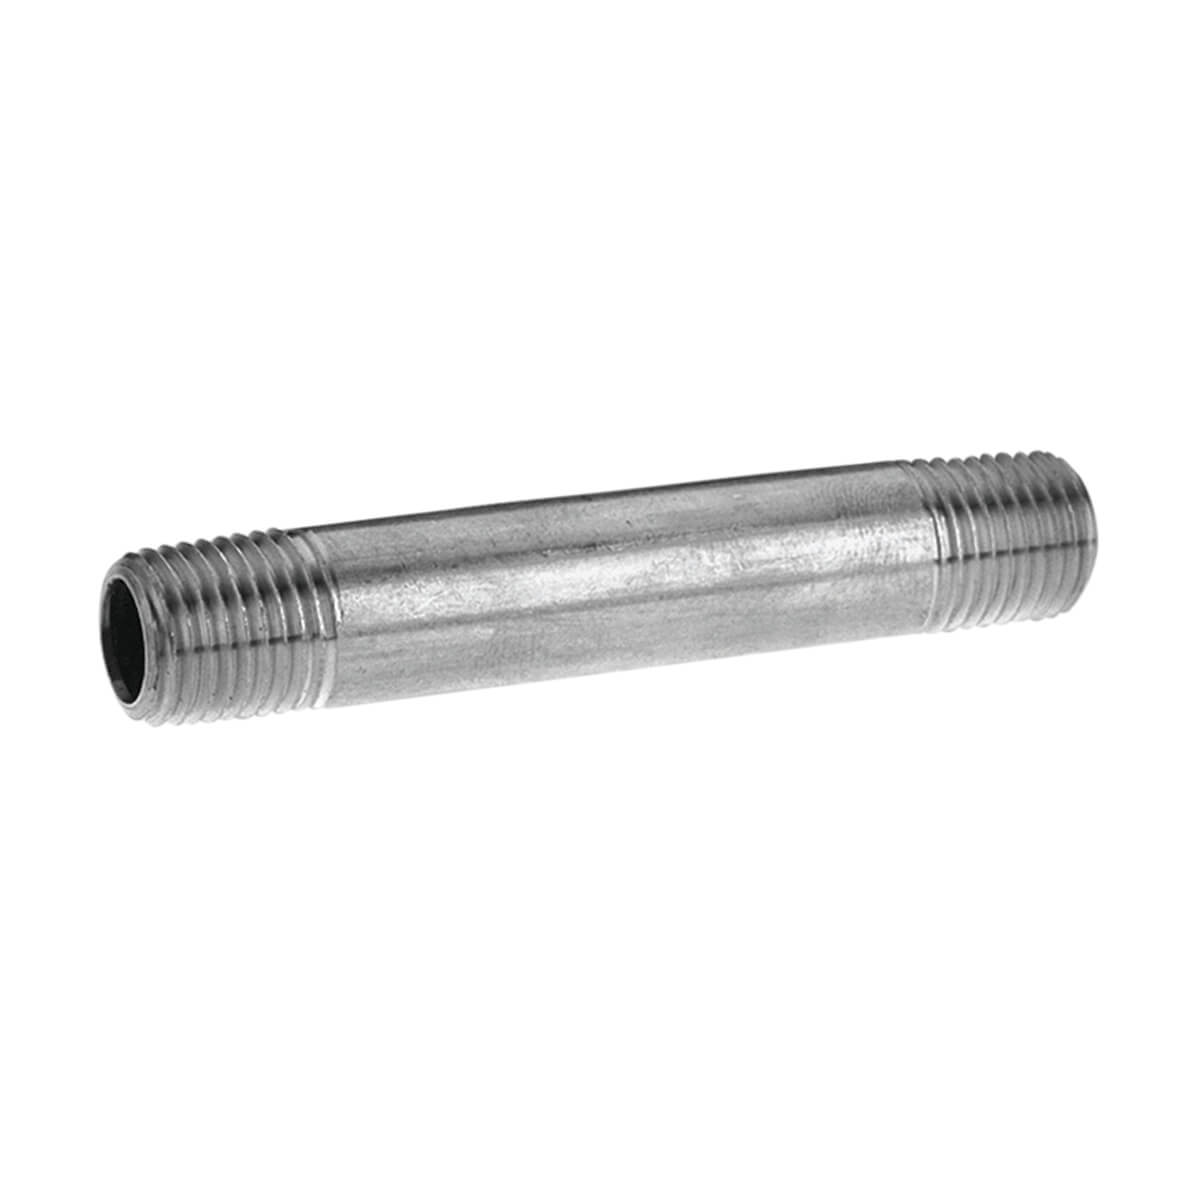 Pipe Nipple Galvanized Steel - 3/8-in x CLOSE